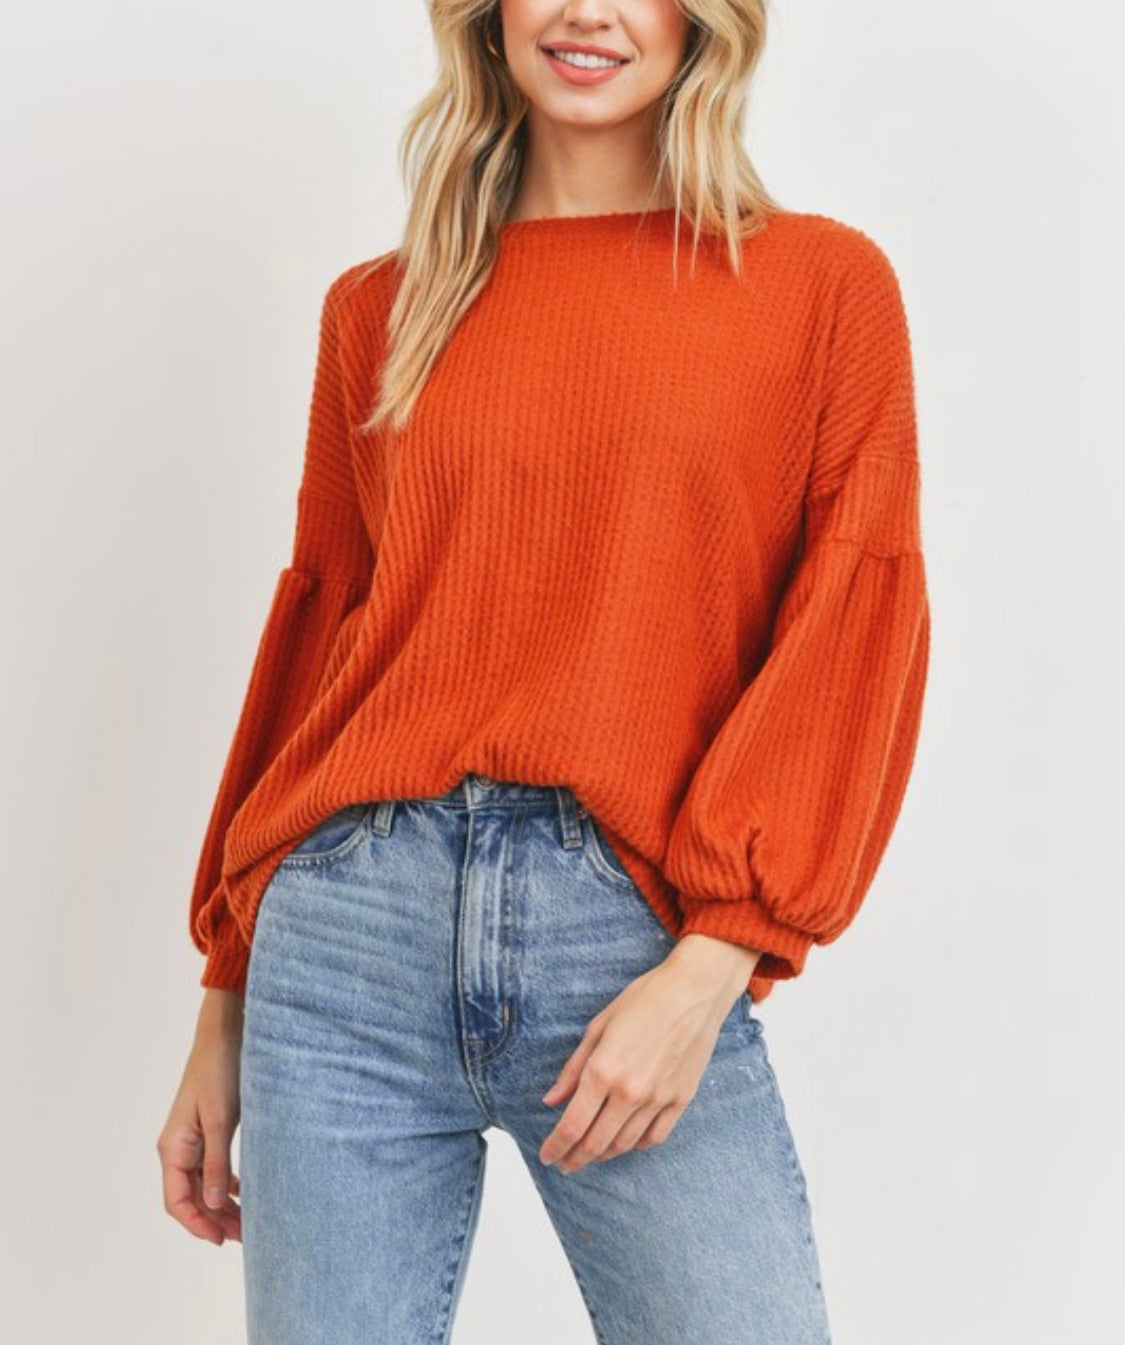 The Pumpkin Spice Sweater